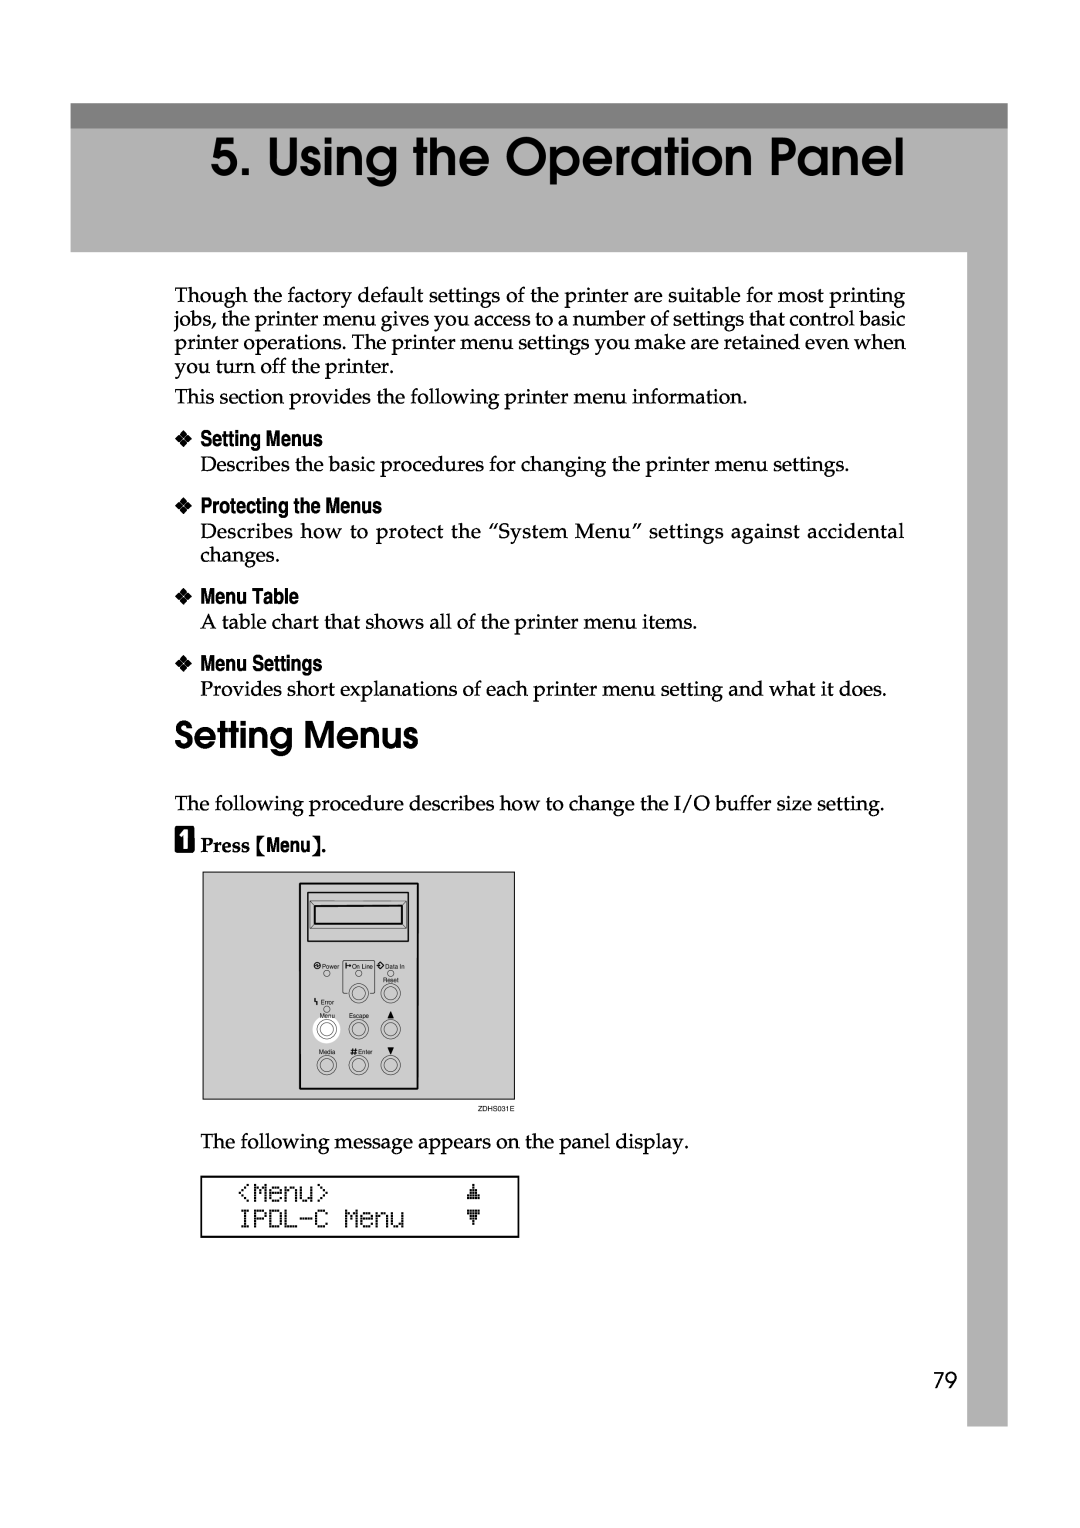 Lanier AP206 manual Using the Operation Panel, Setting Menus, A Press Menu, IPDL-C Menu, Protecting the Menus, Menu Table 